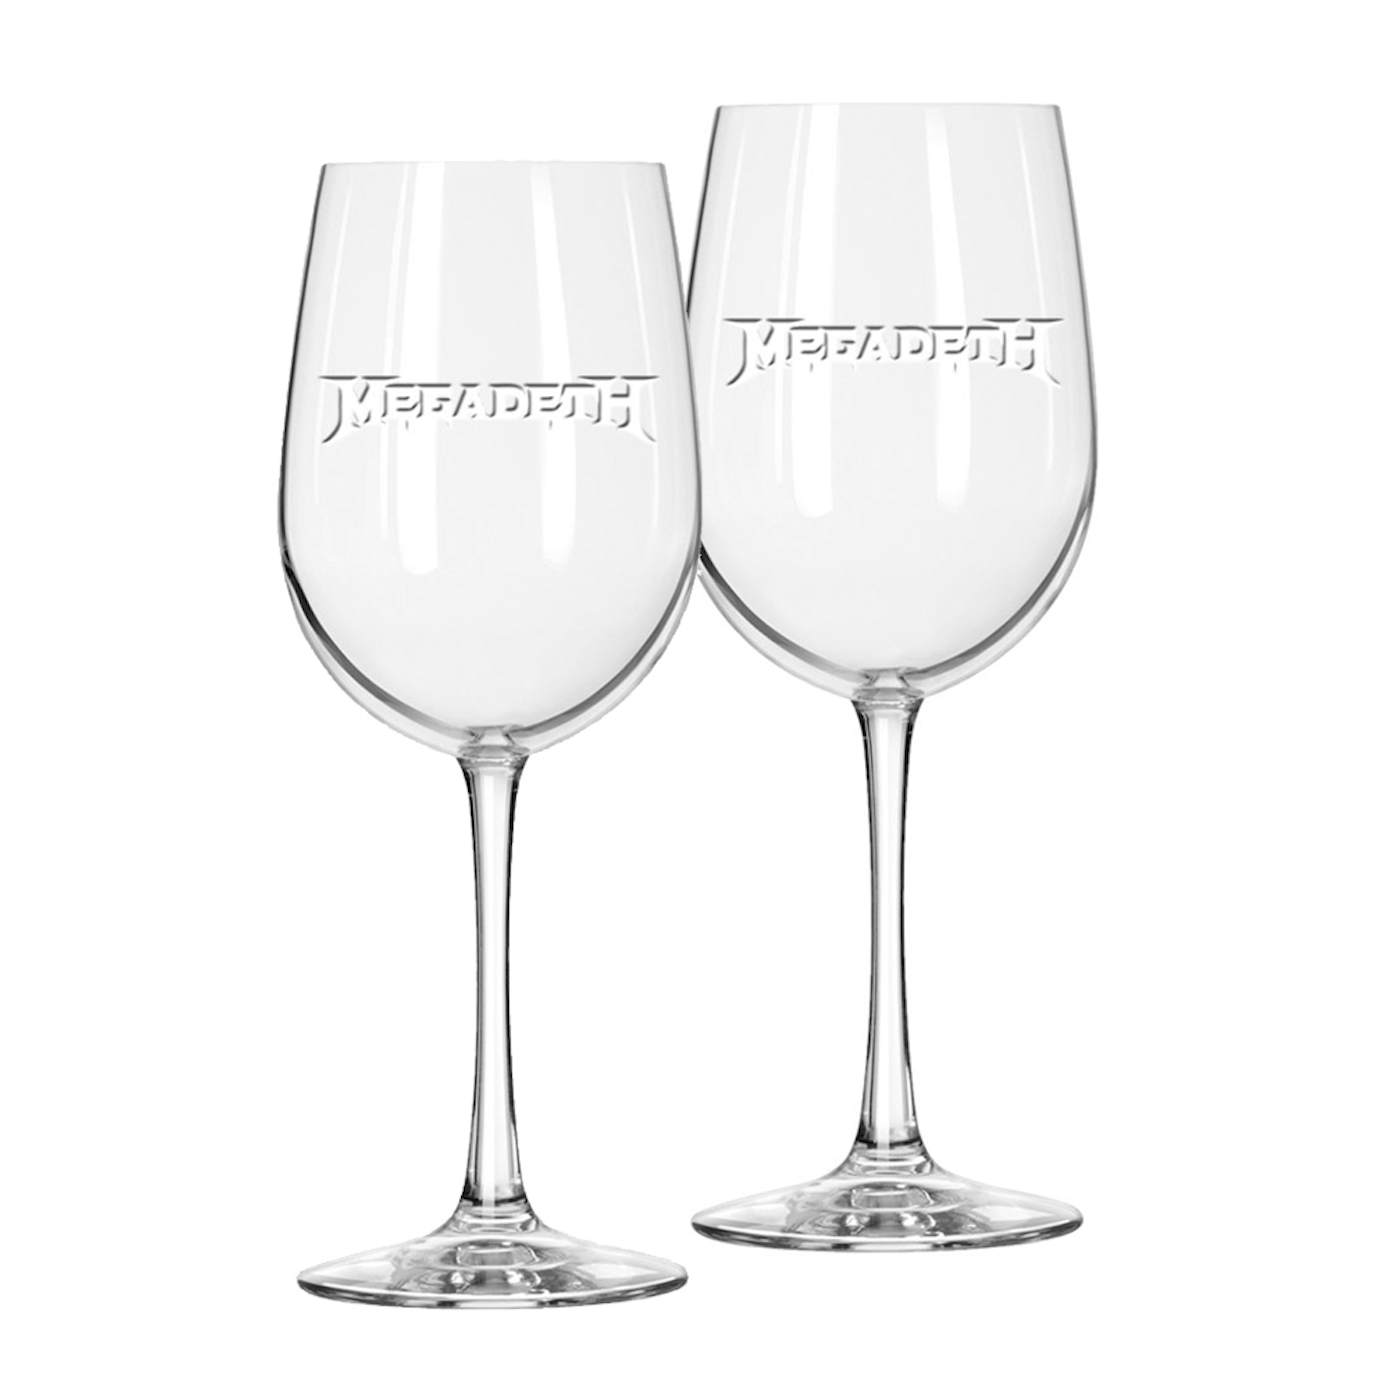 Megadeth Wine Glass Set